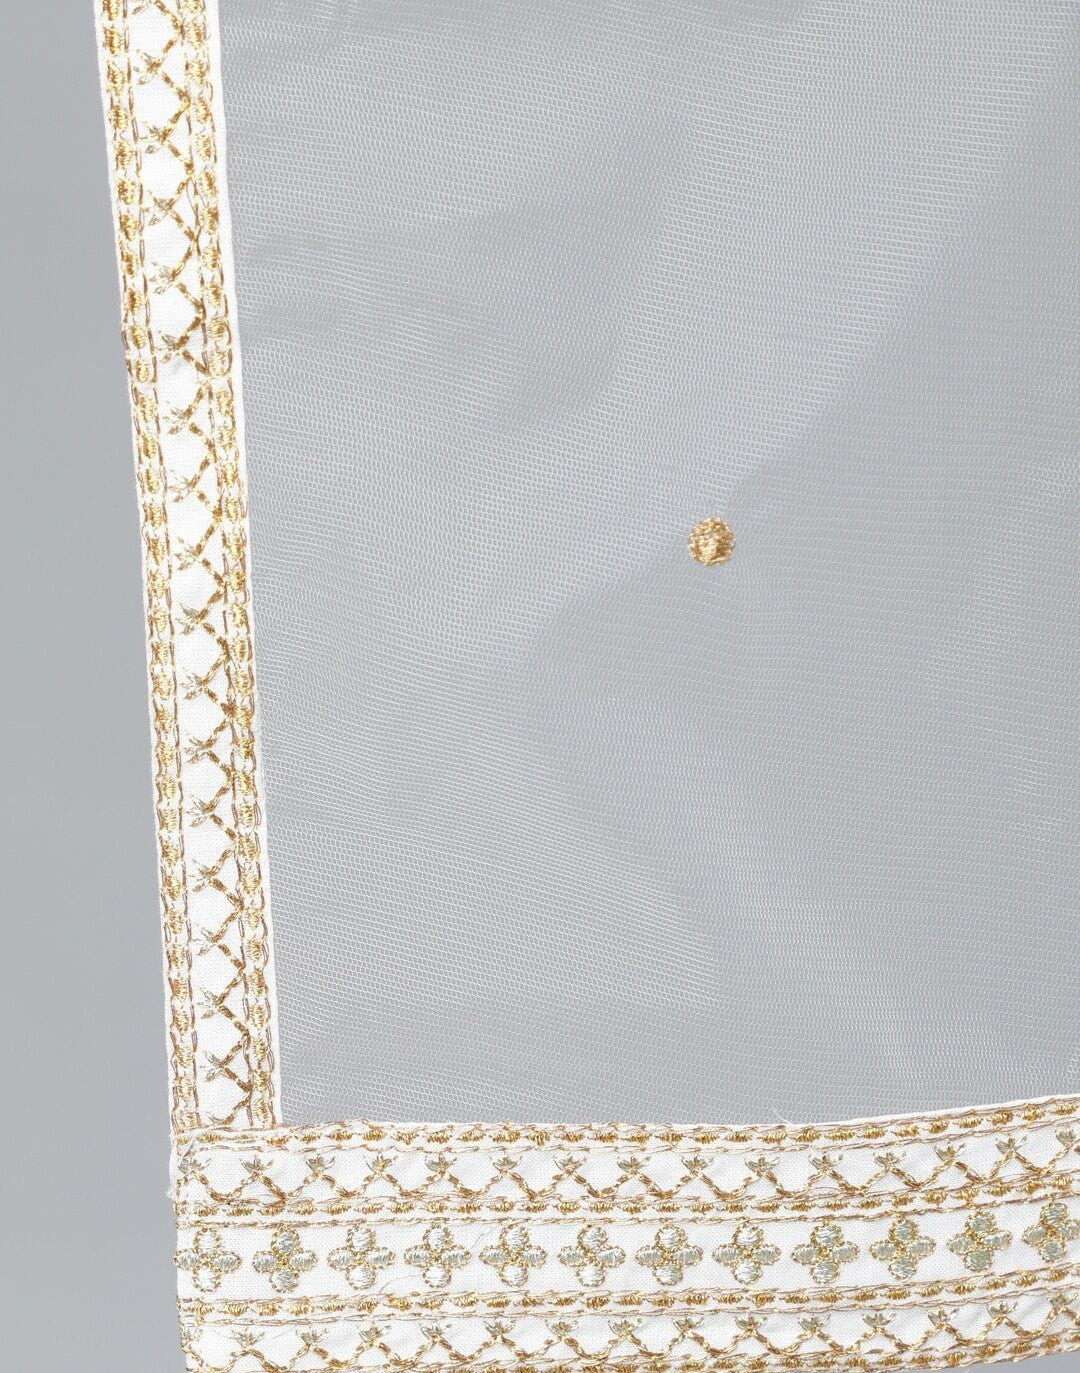 Off-White Embroidered Flared Kurta Plazzo With Net Dupatta